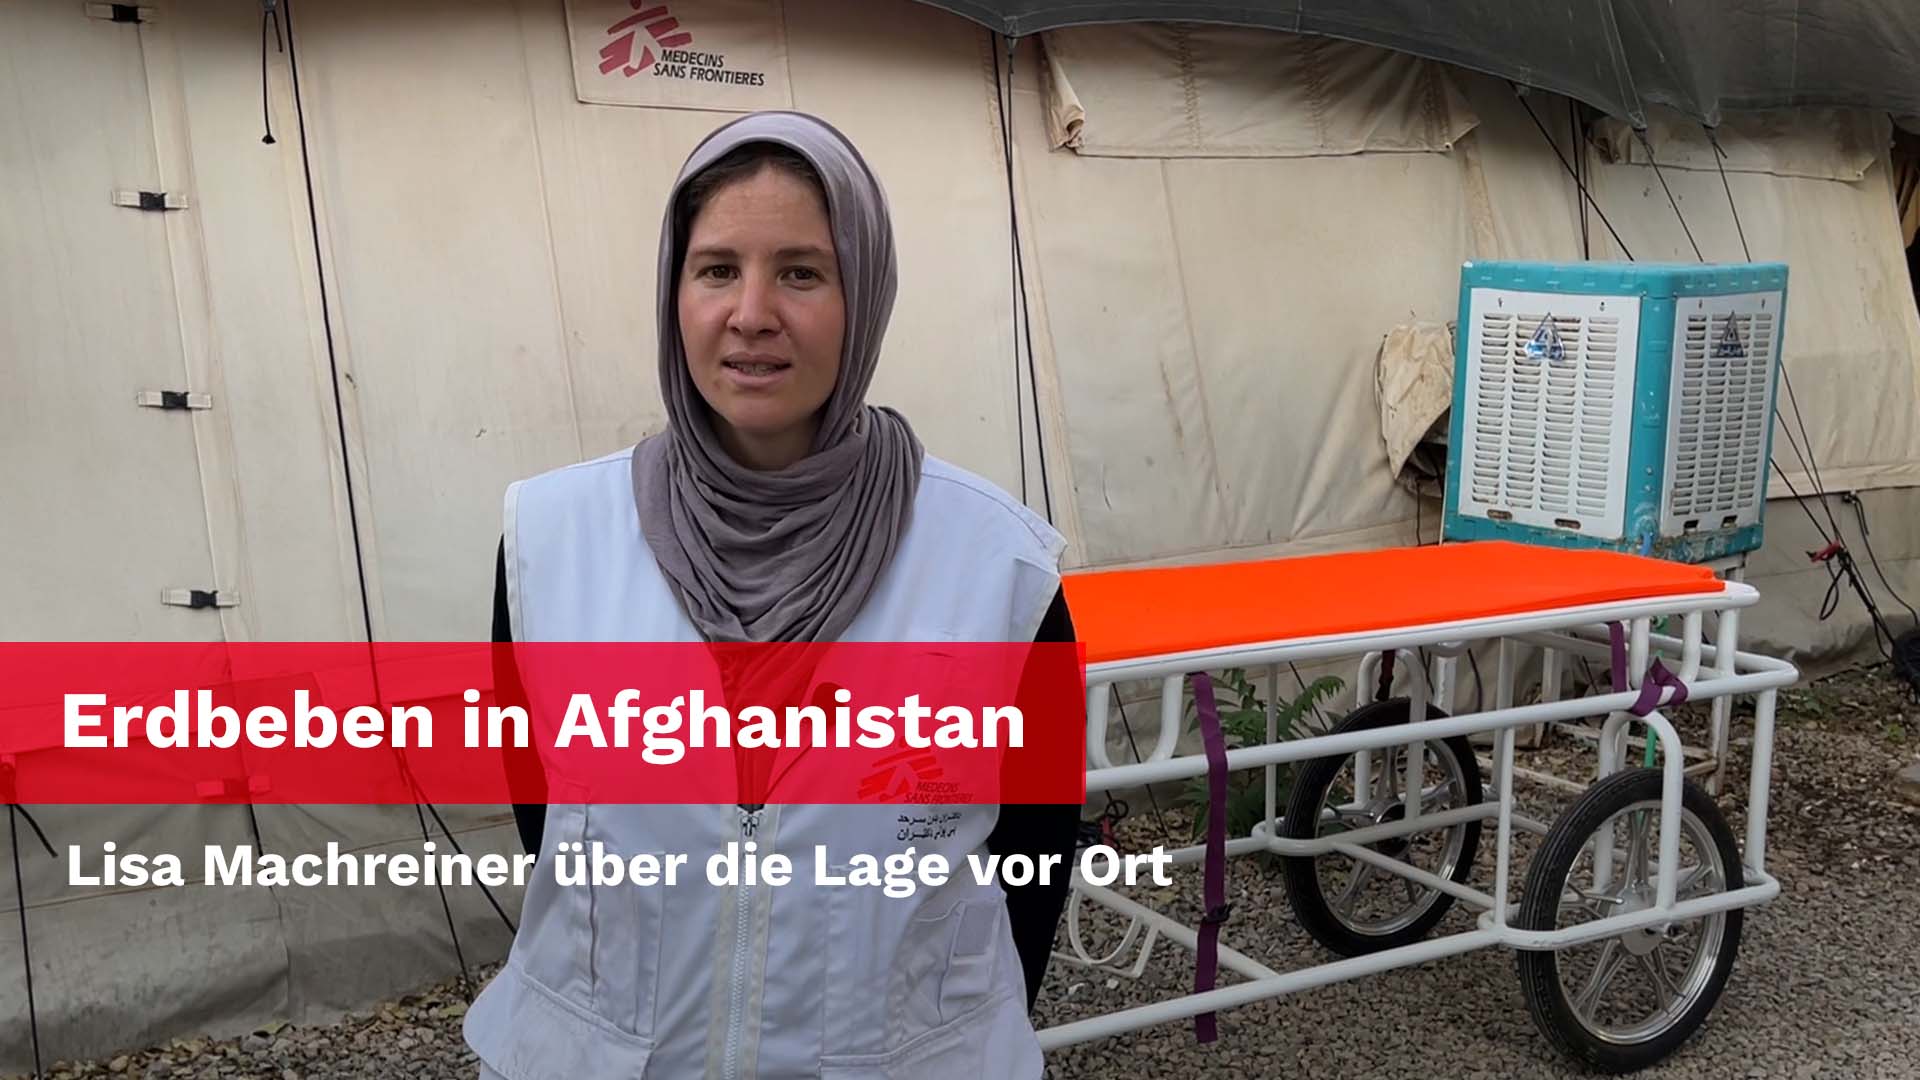 Erdbeben in Afghanistan: Lisa Machreiner berichtet